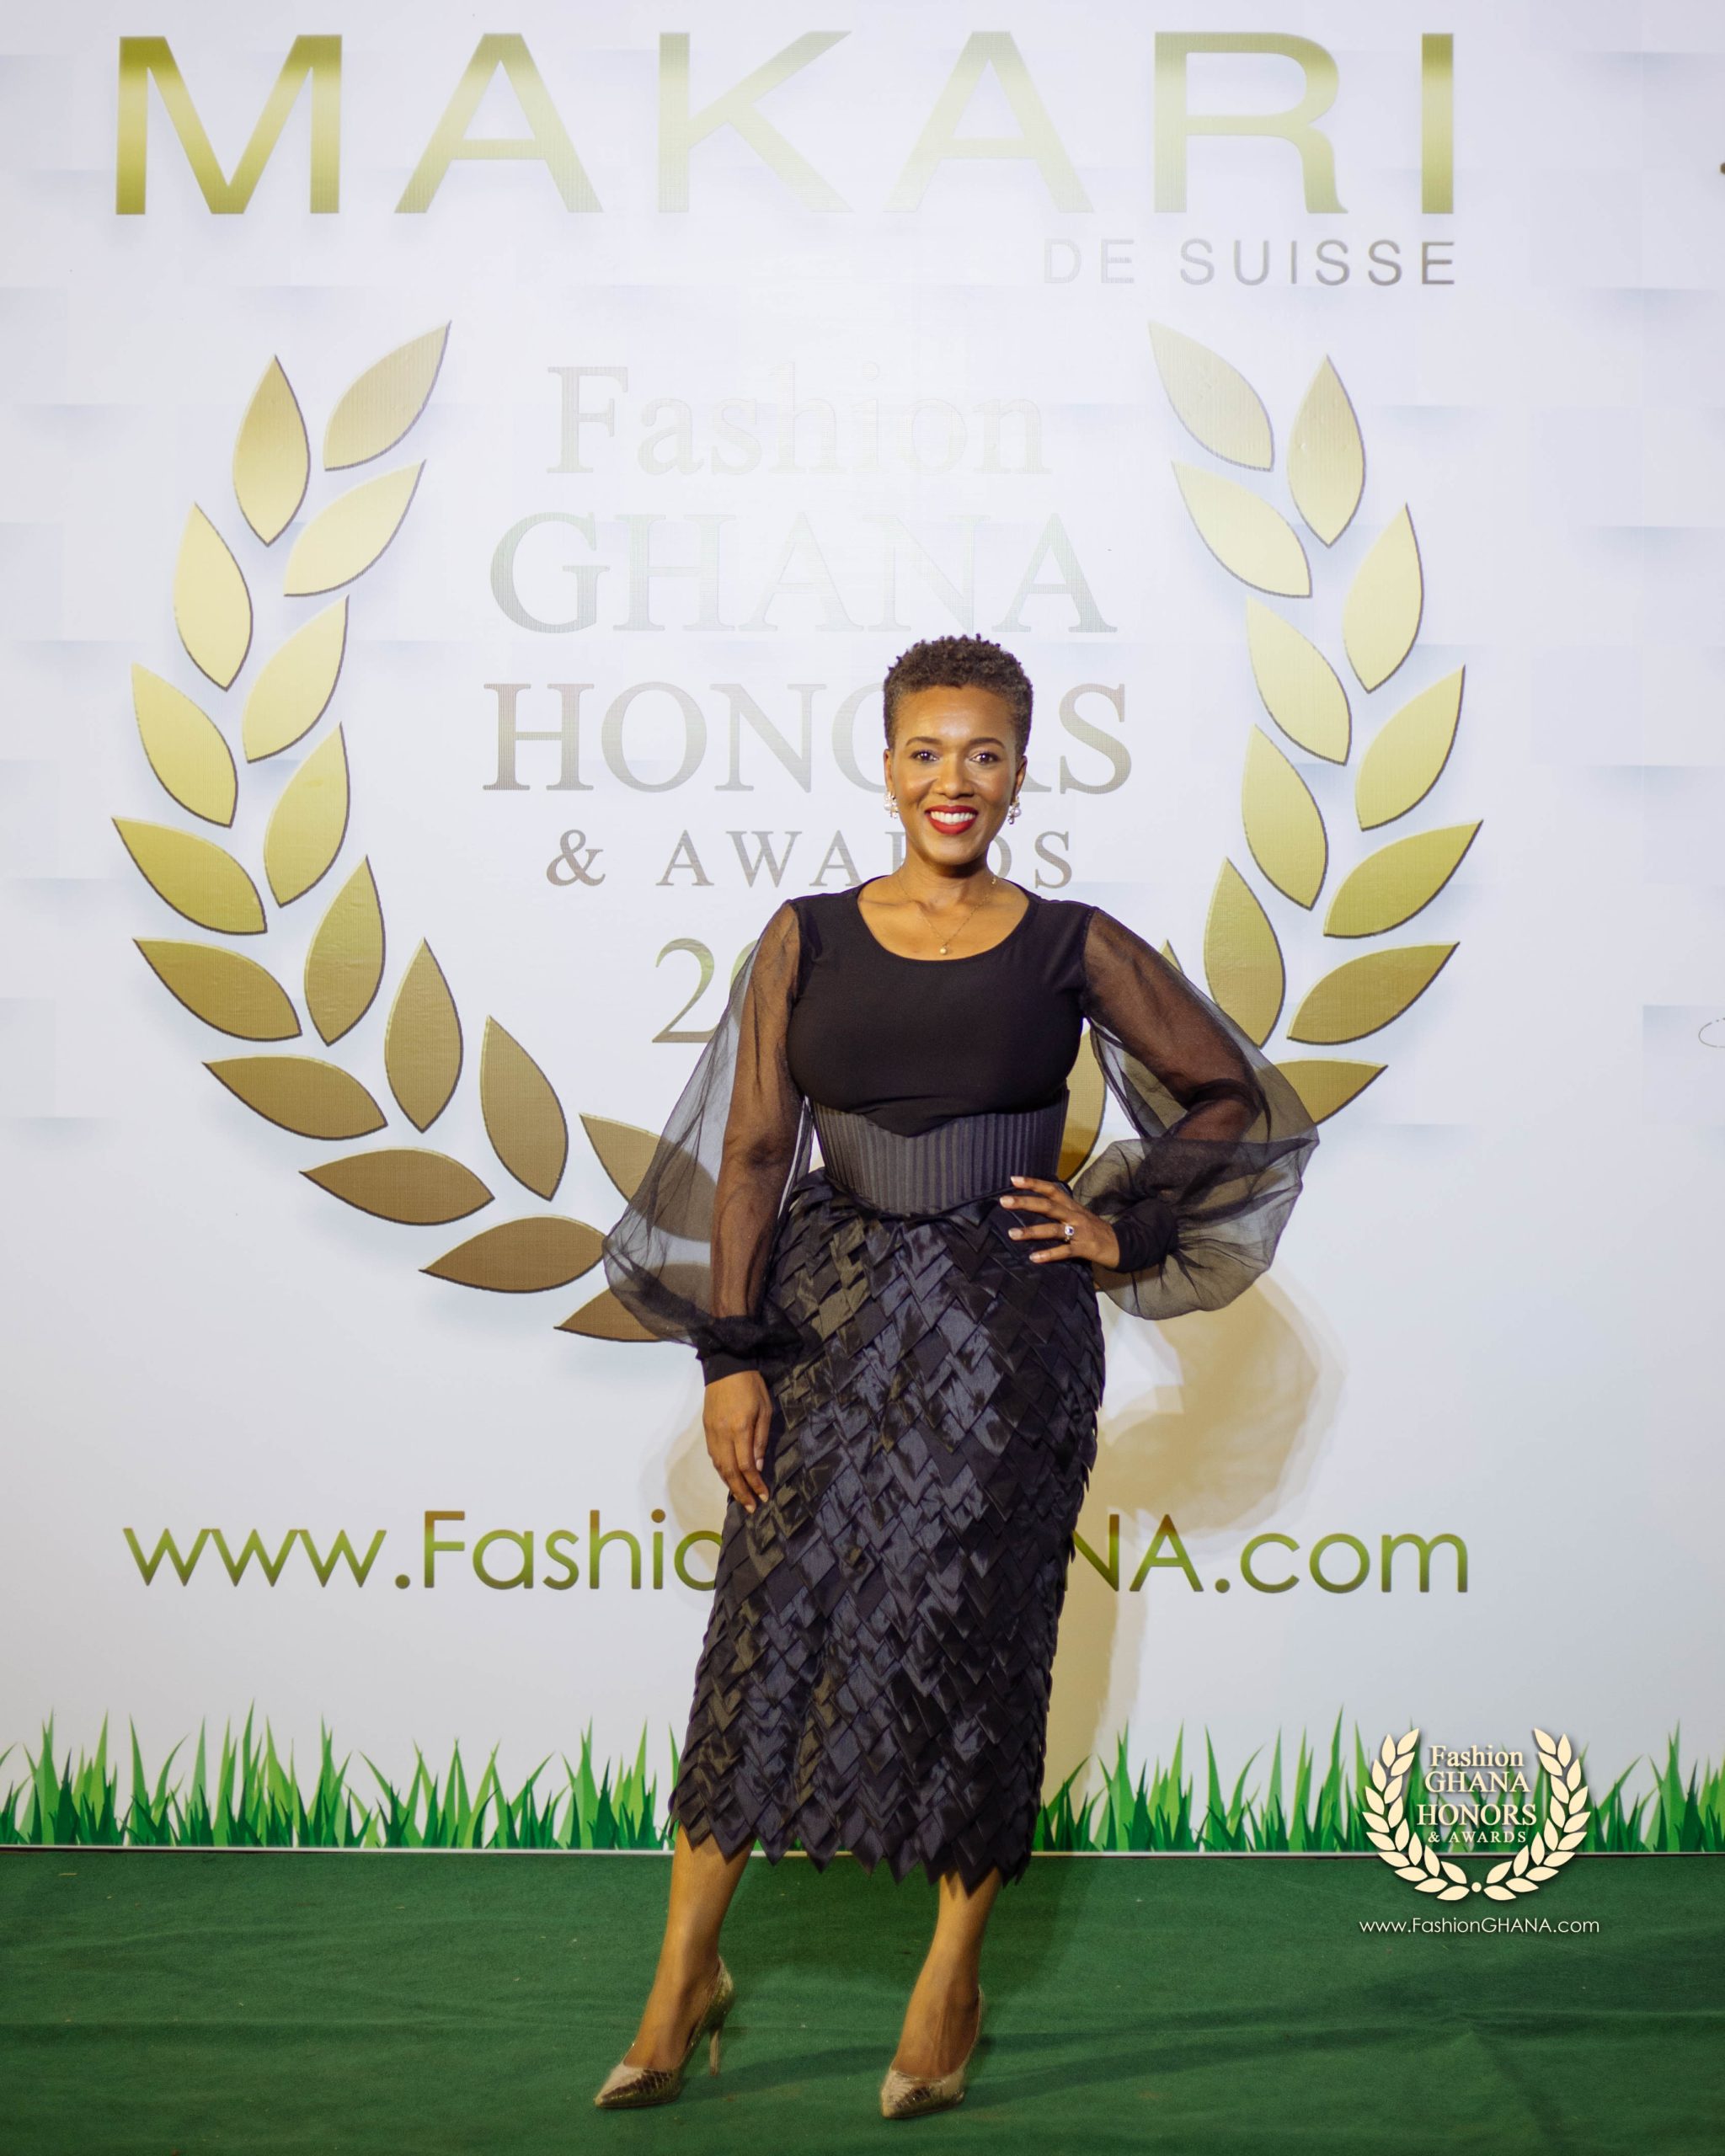 Photo: Red Carpet - FashionGHANA Honours & Awards 2022